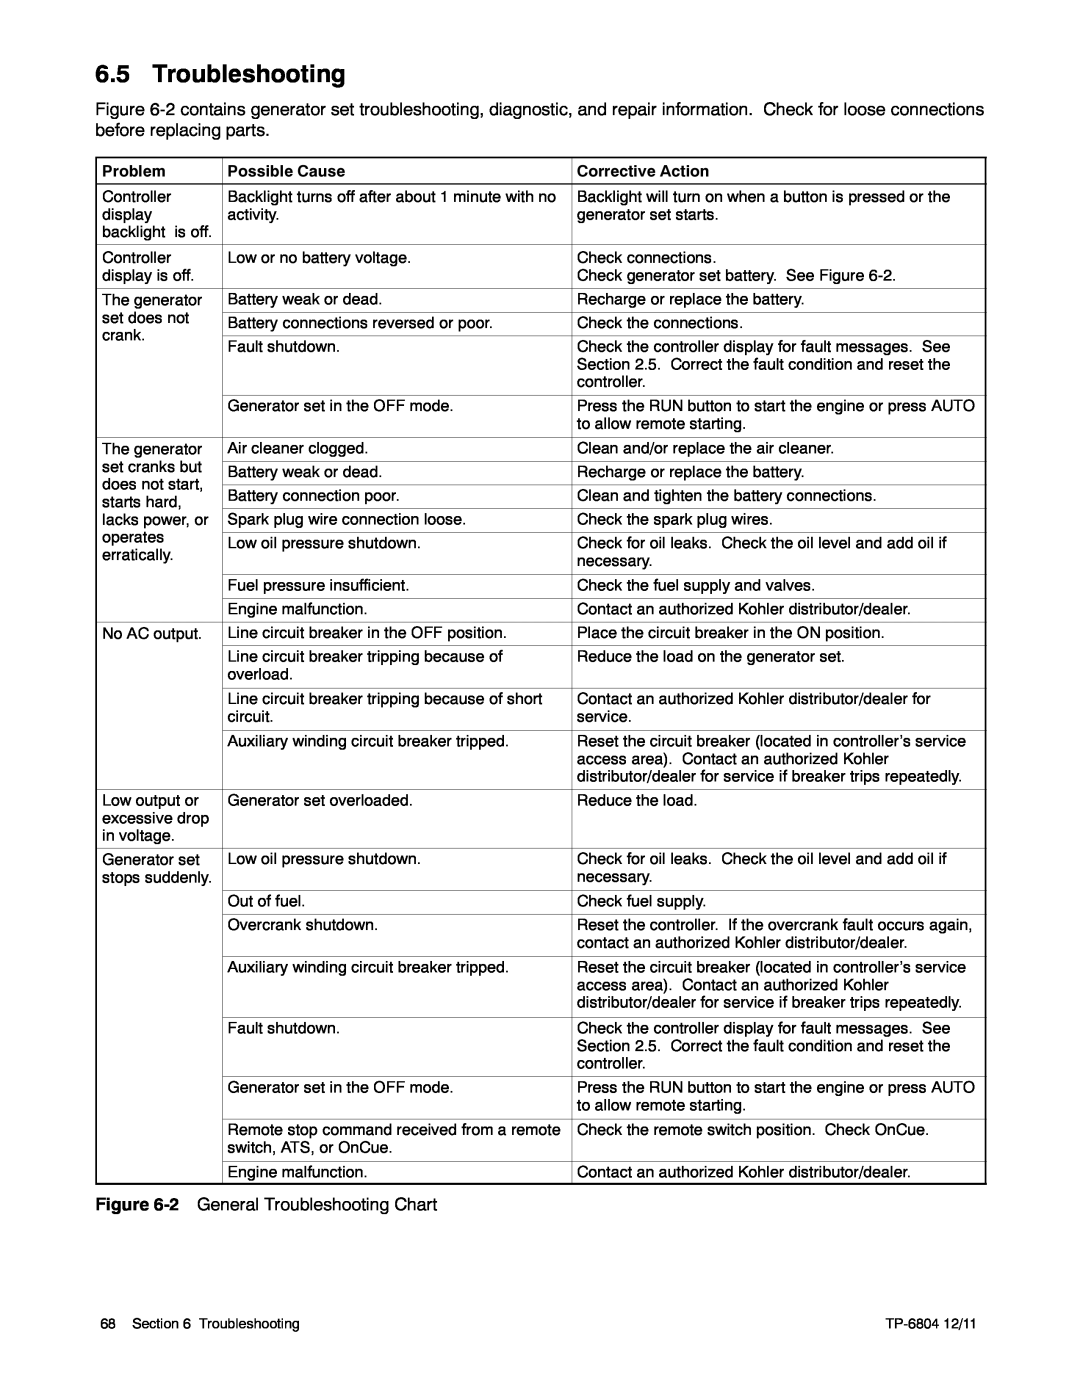 Kohler 14/20RESAL manual 2 General Troubleshooting Chart 